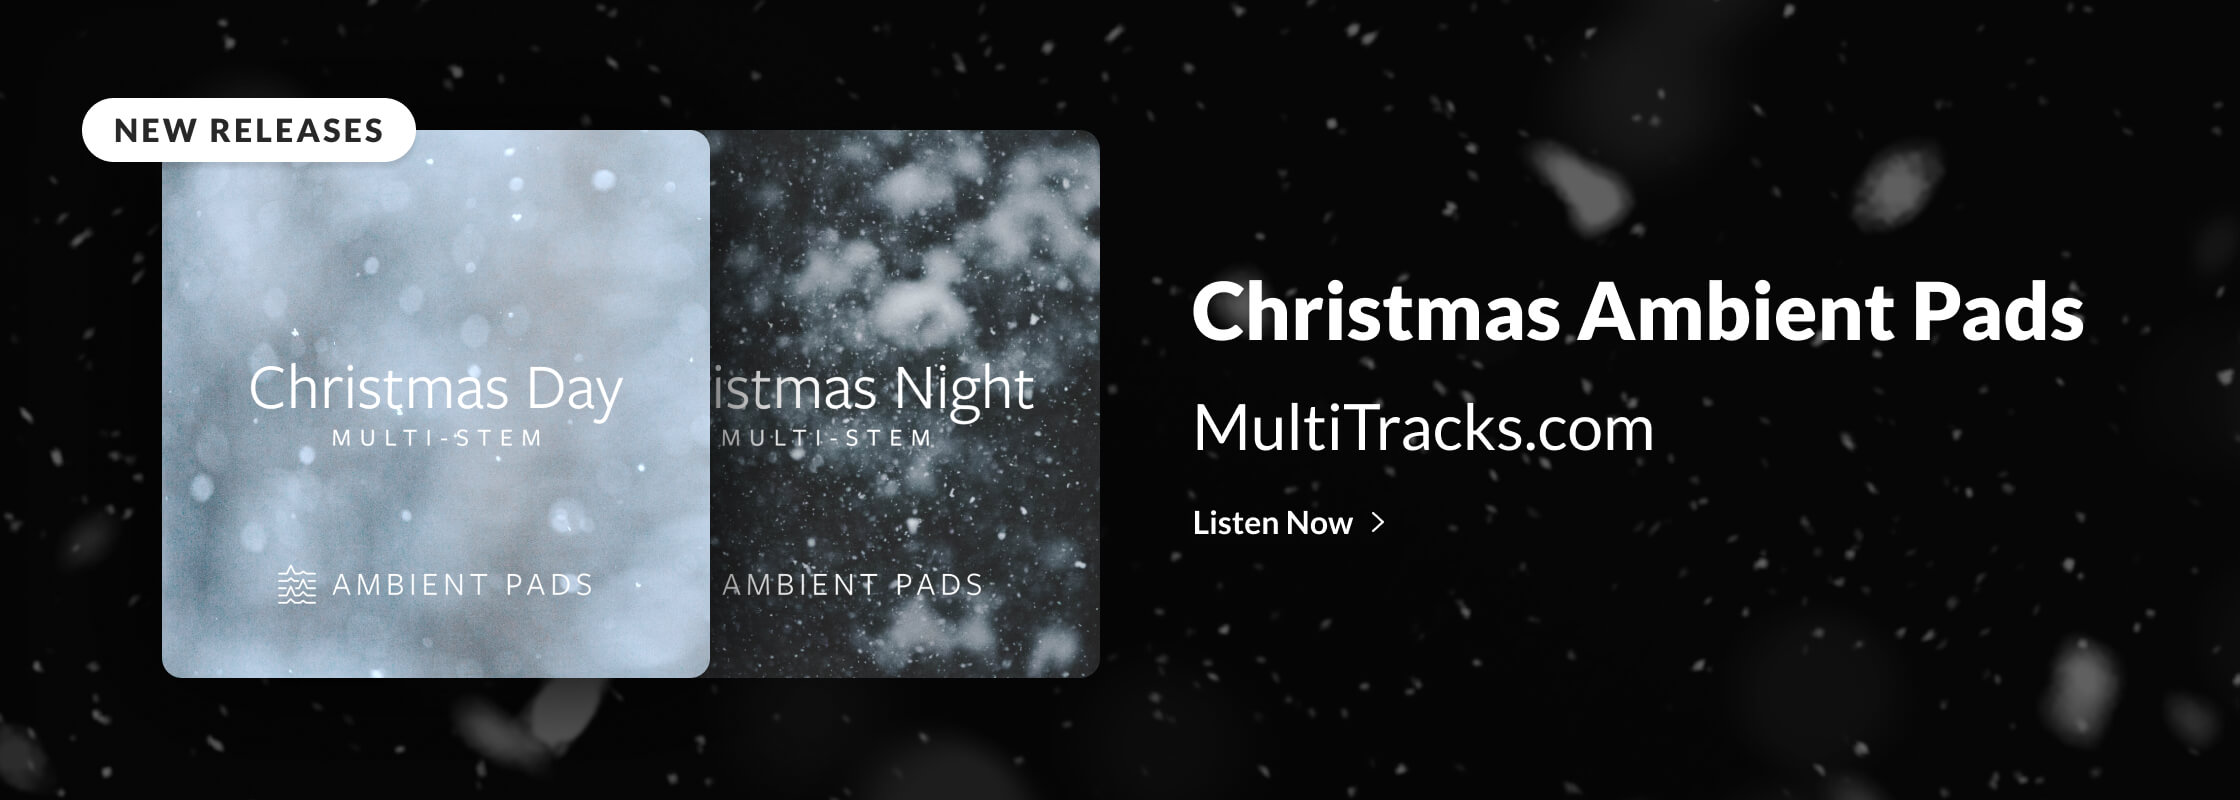 MultiTracks.com | Christmas Ambient Pads